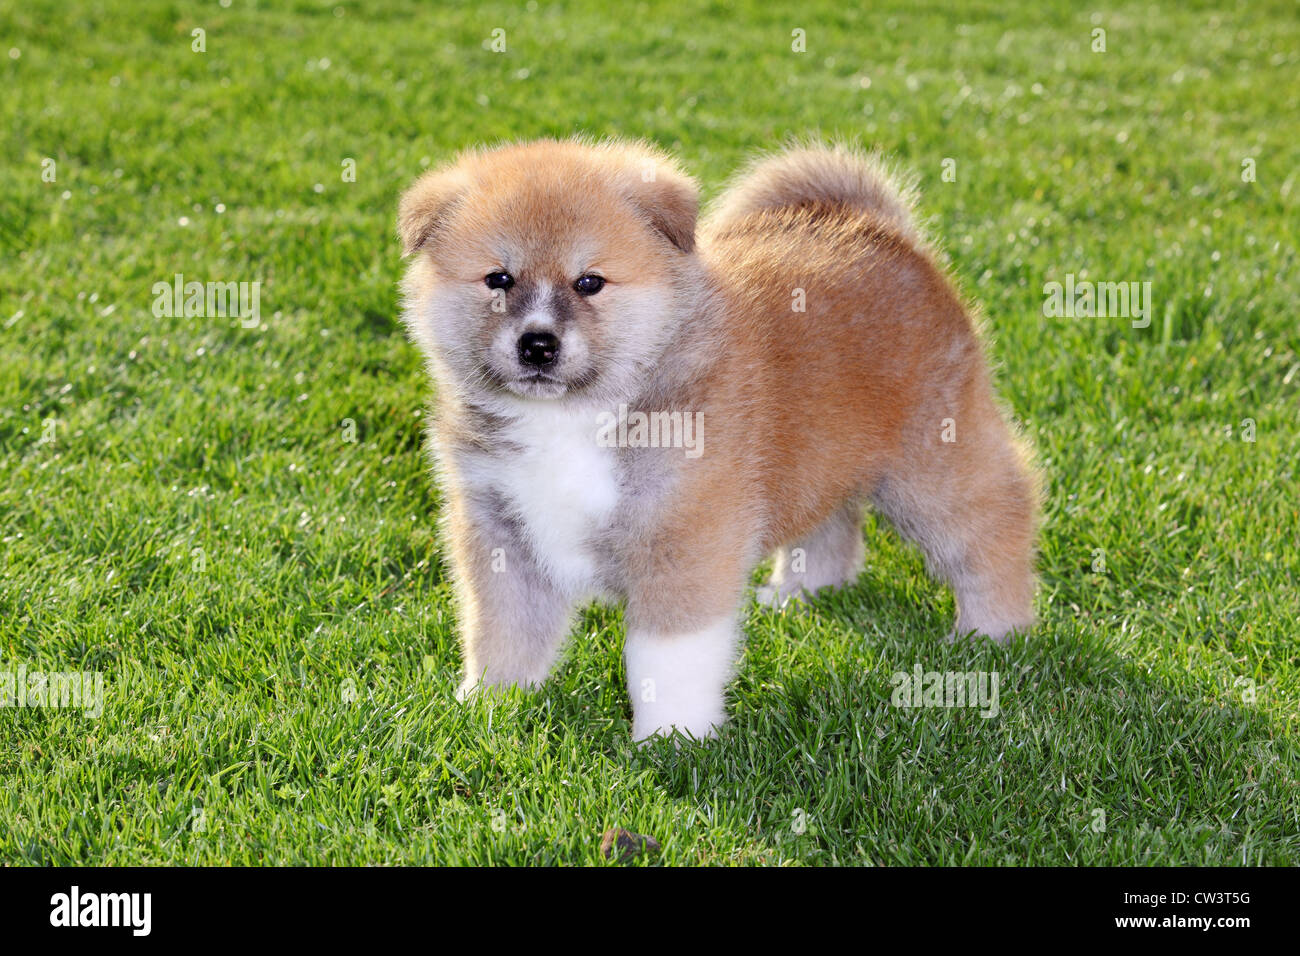 One Akita Inu puppy dog on green grass Stock Photo - Alamy